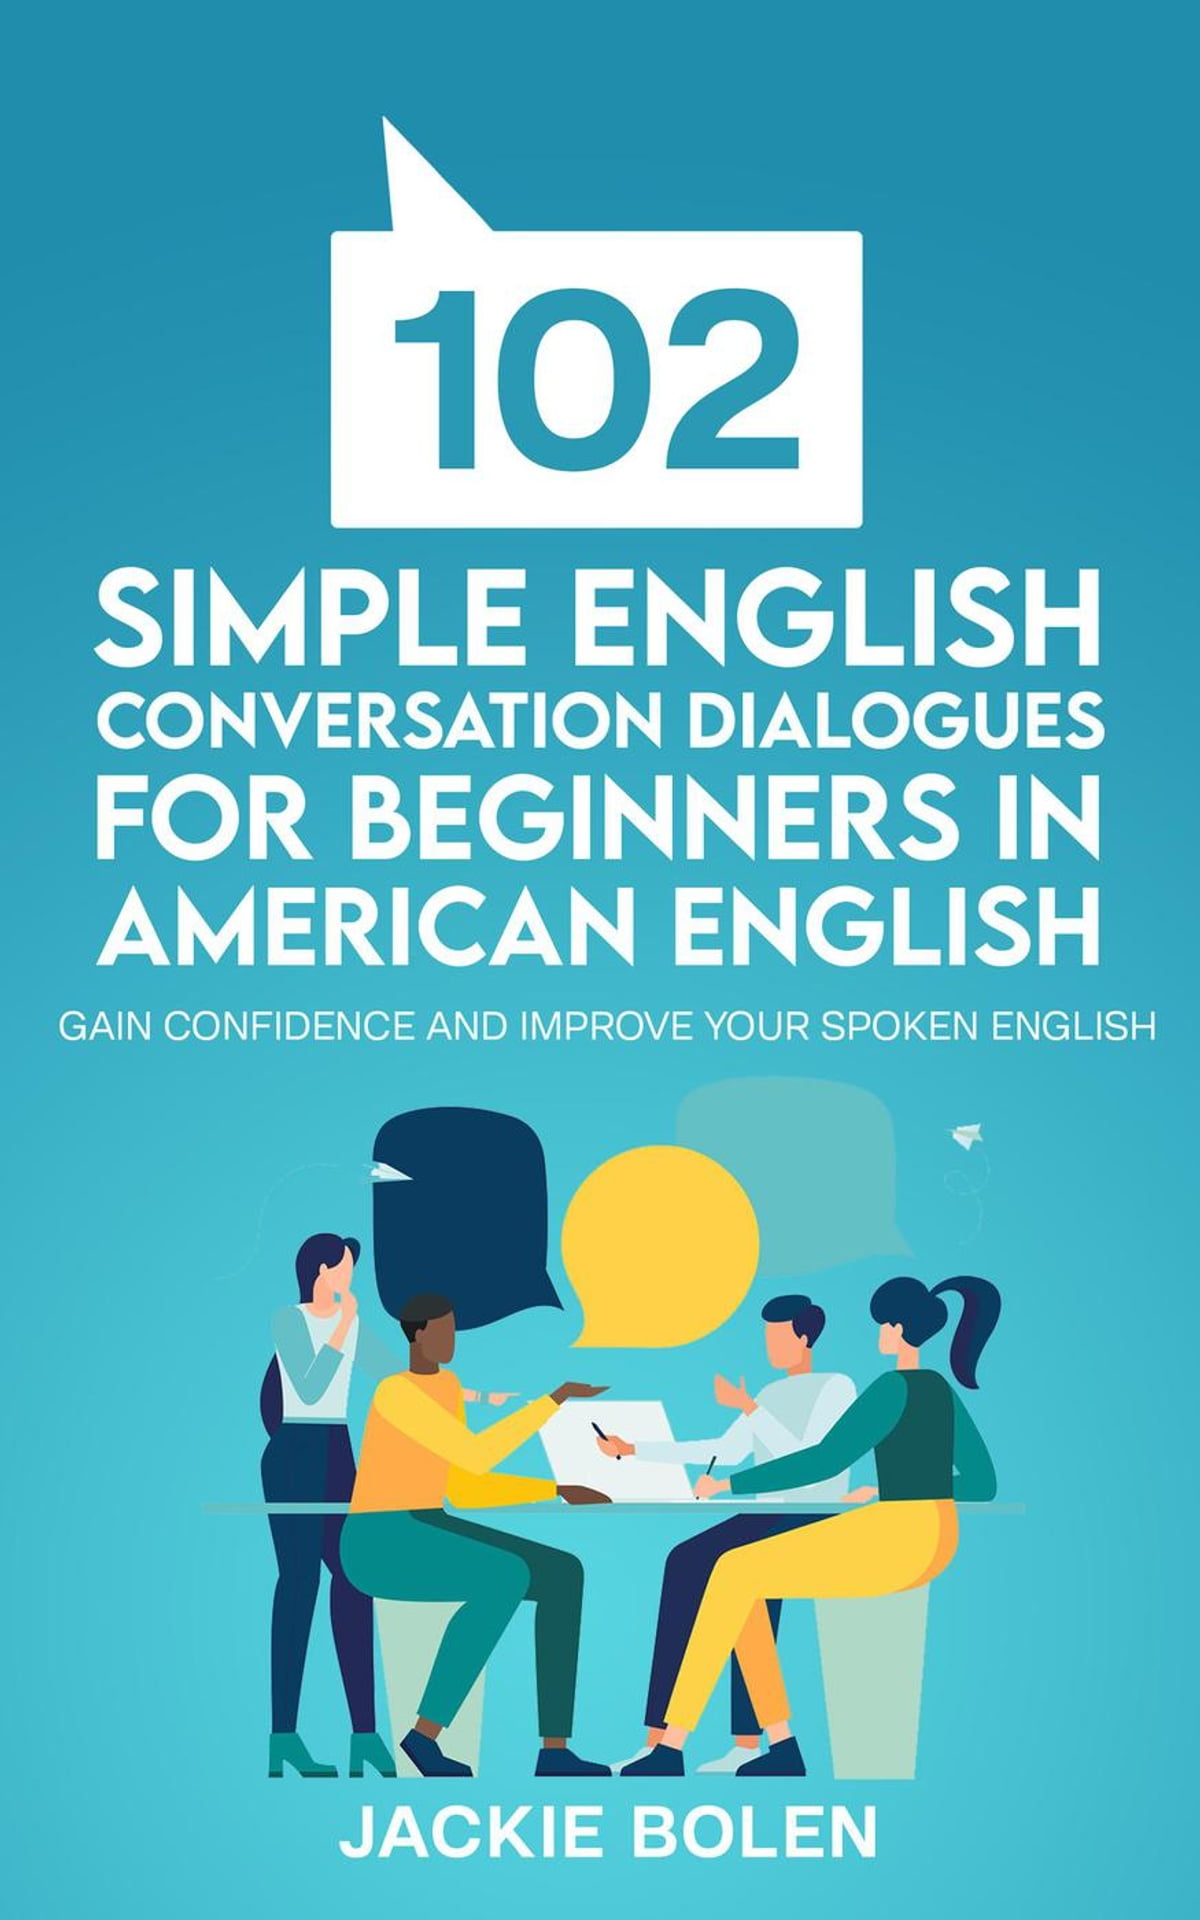 102 Simple English Conversation